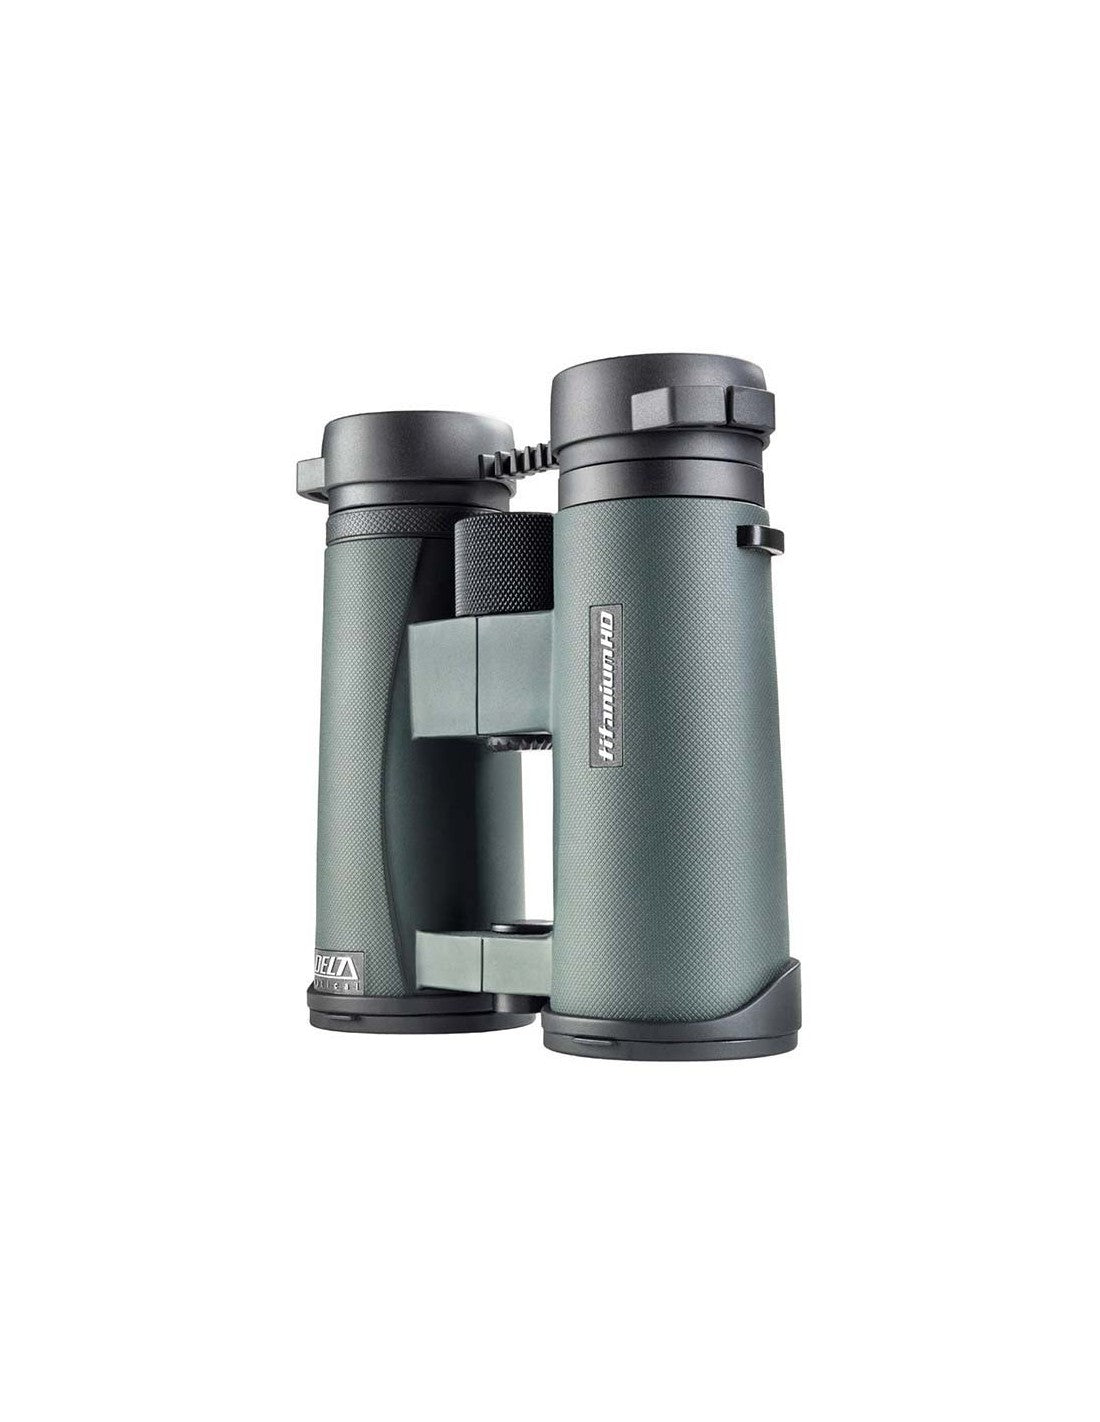 Titanium HD Binoculars